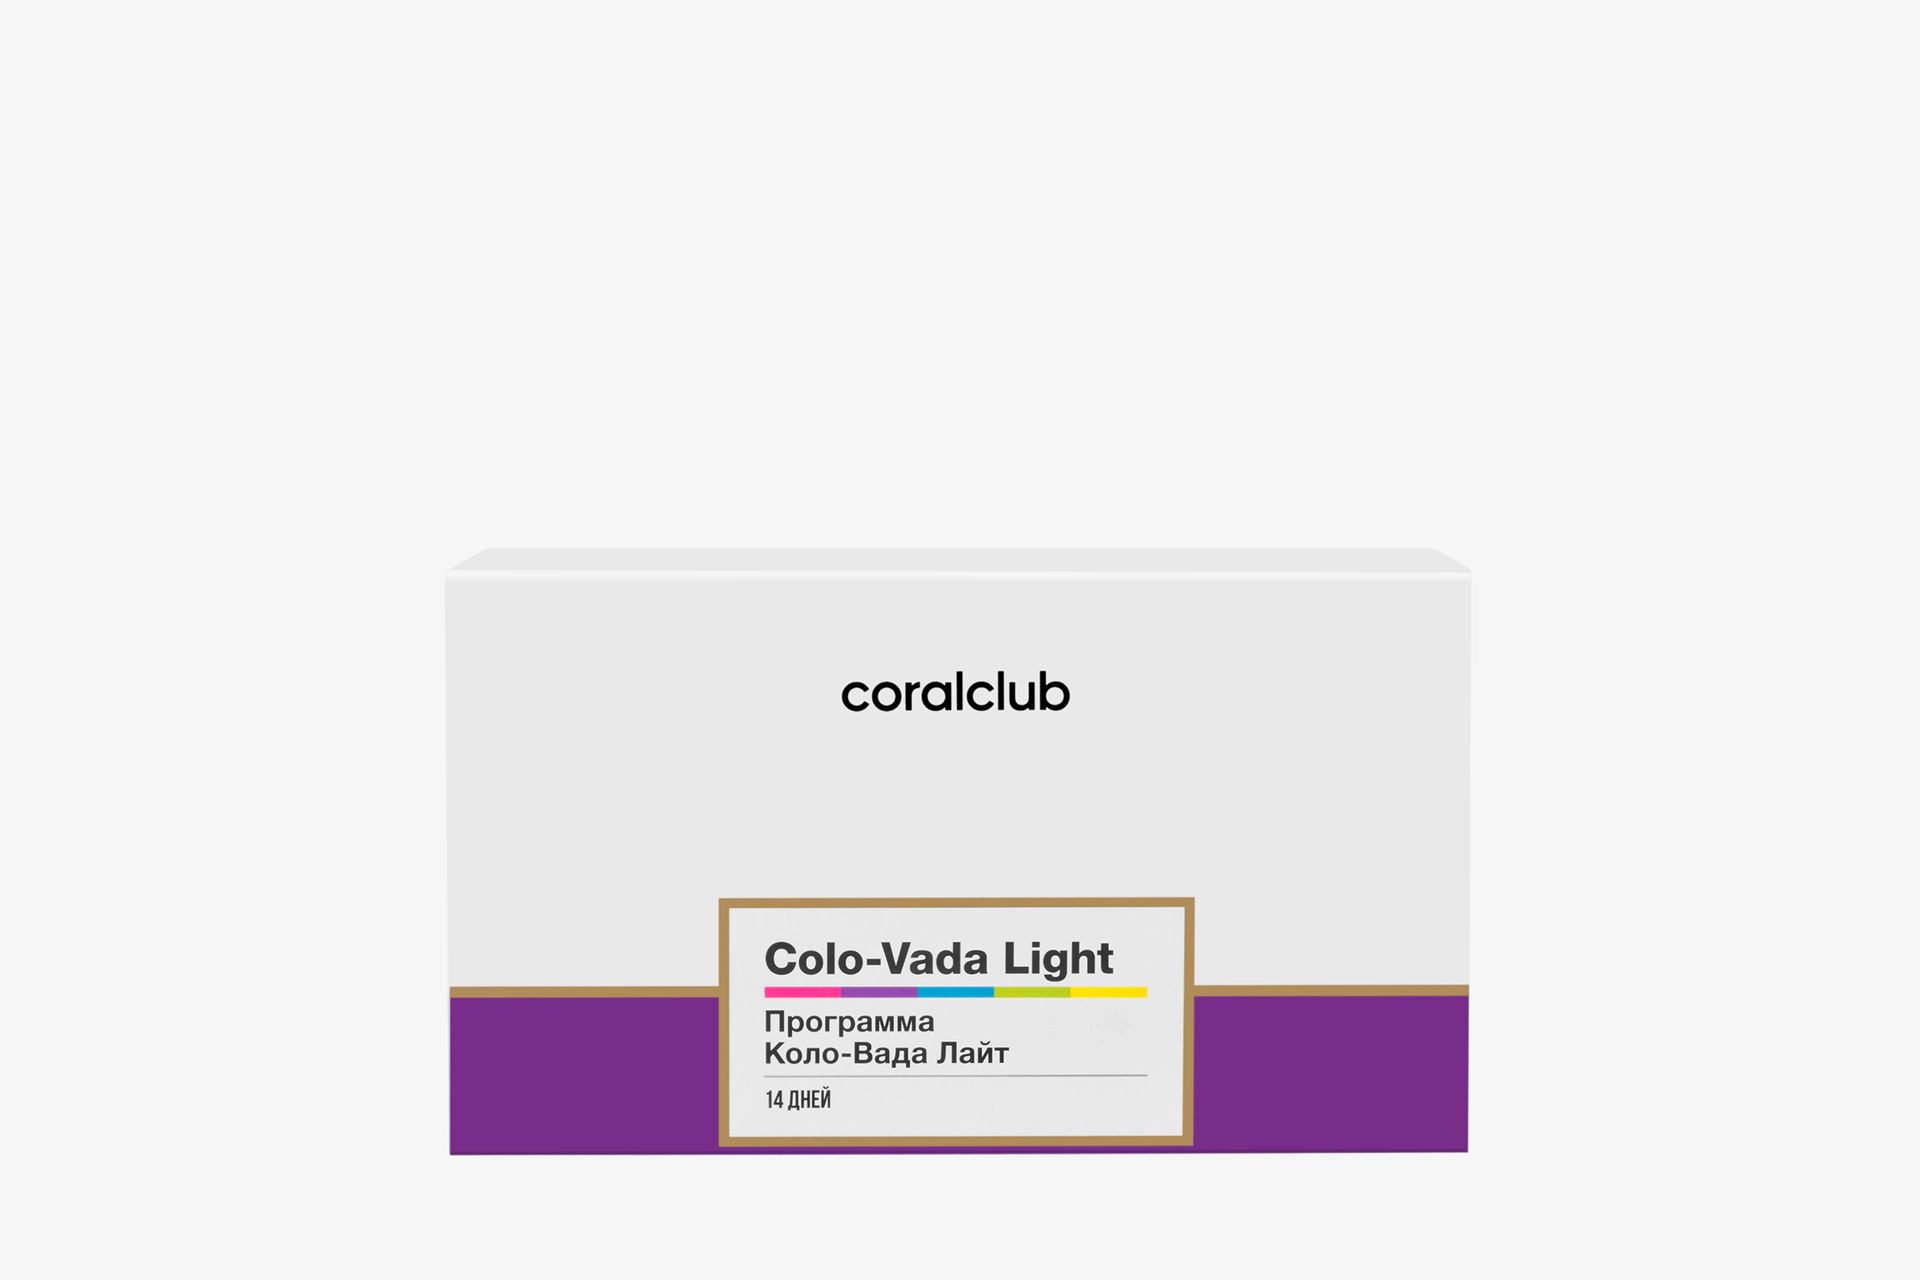 Programm Colo-Vada Light